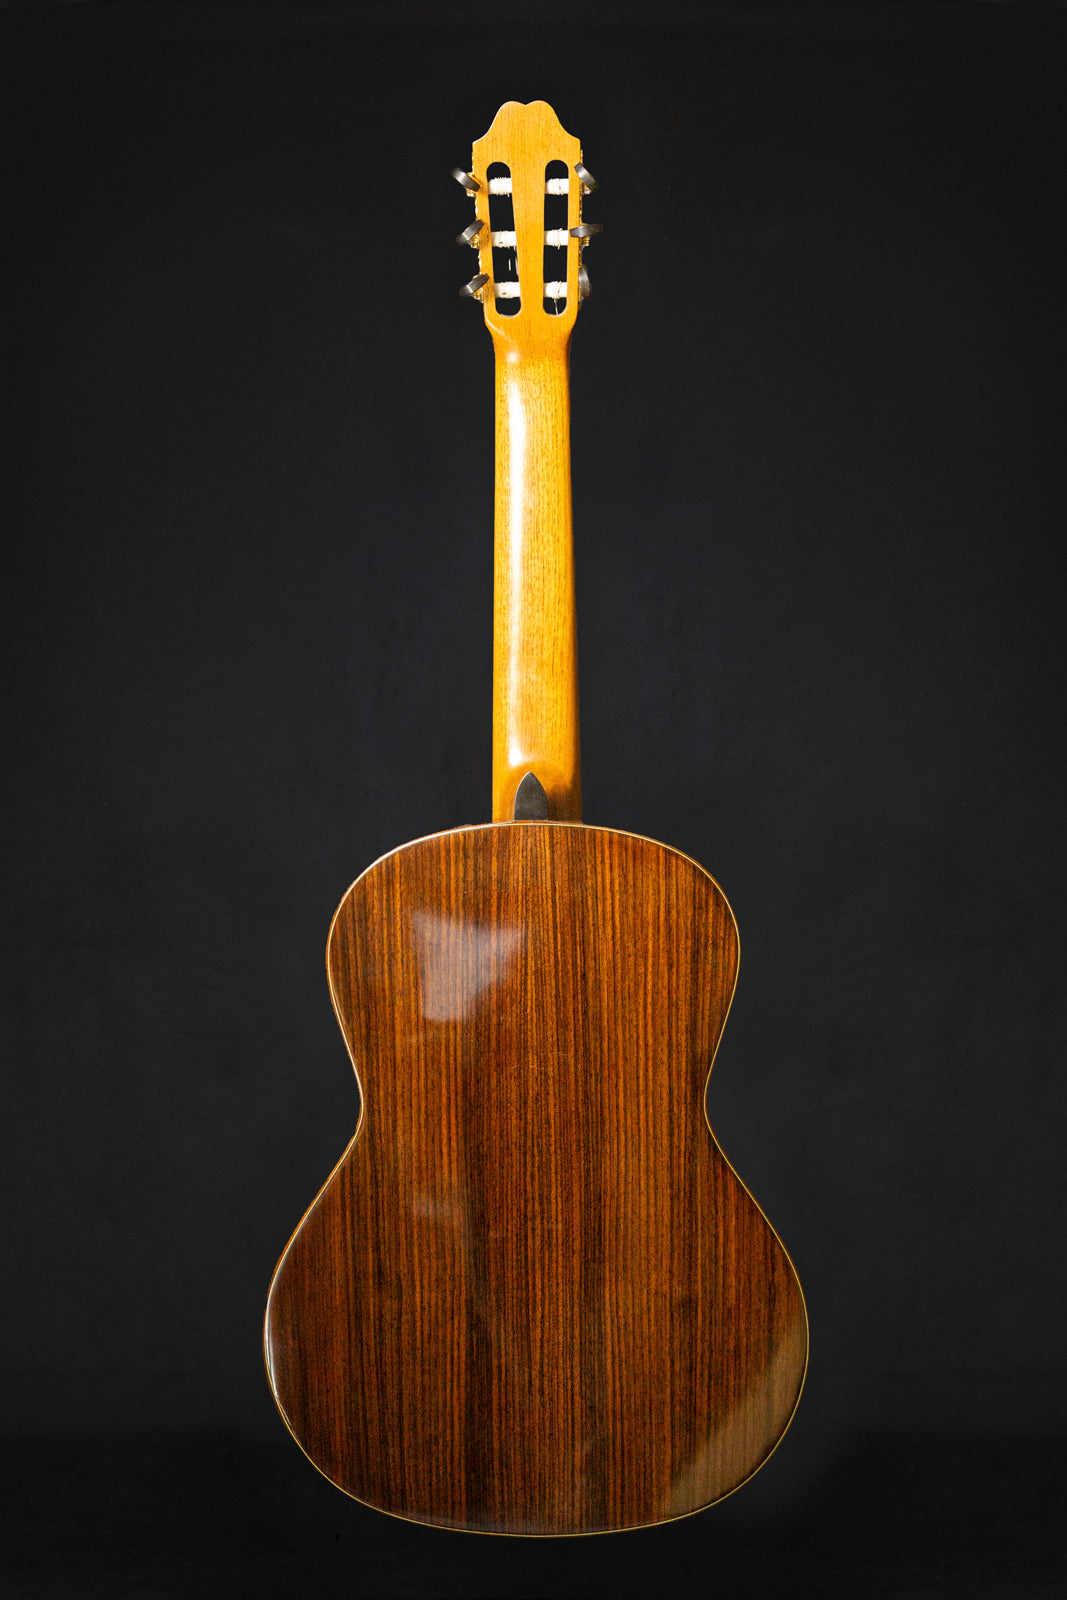 Jon Pinsky Handmade Classical guitar no.18